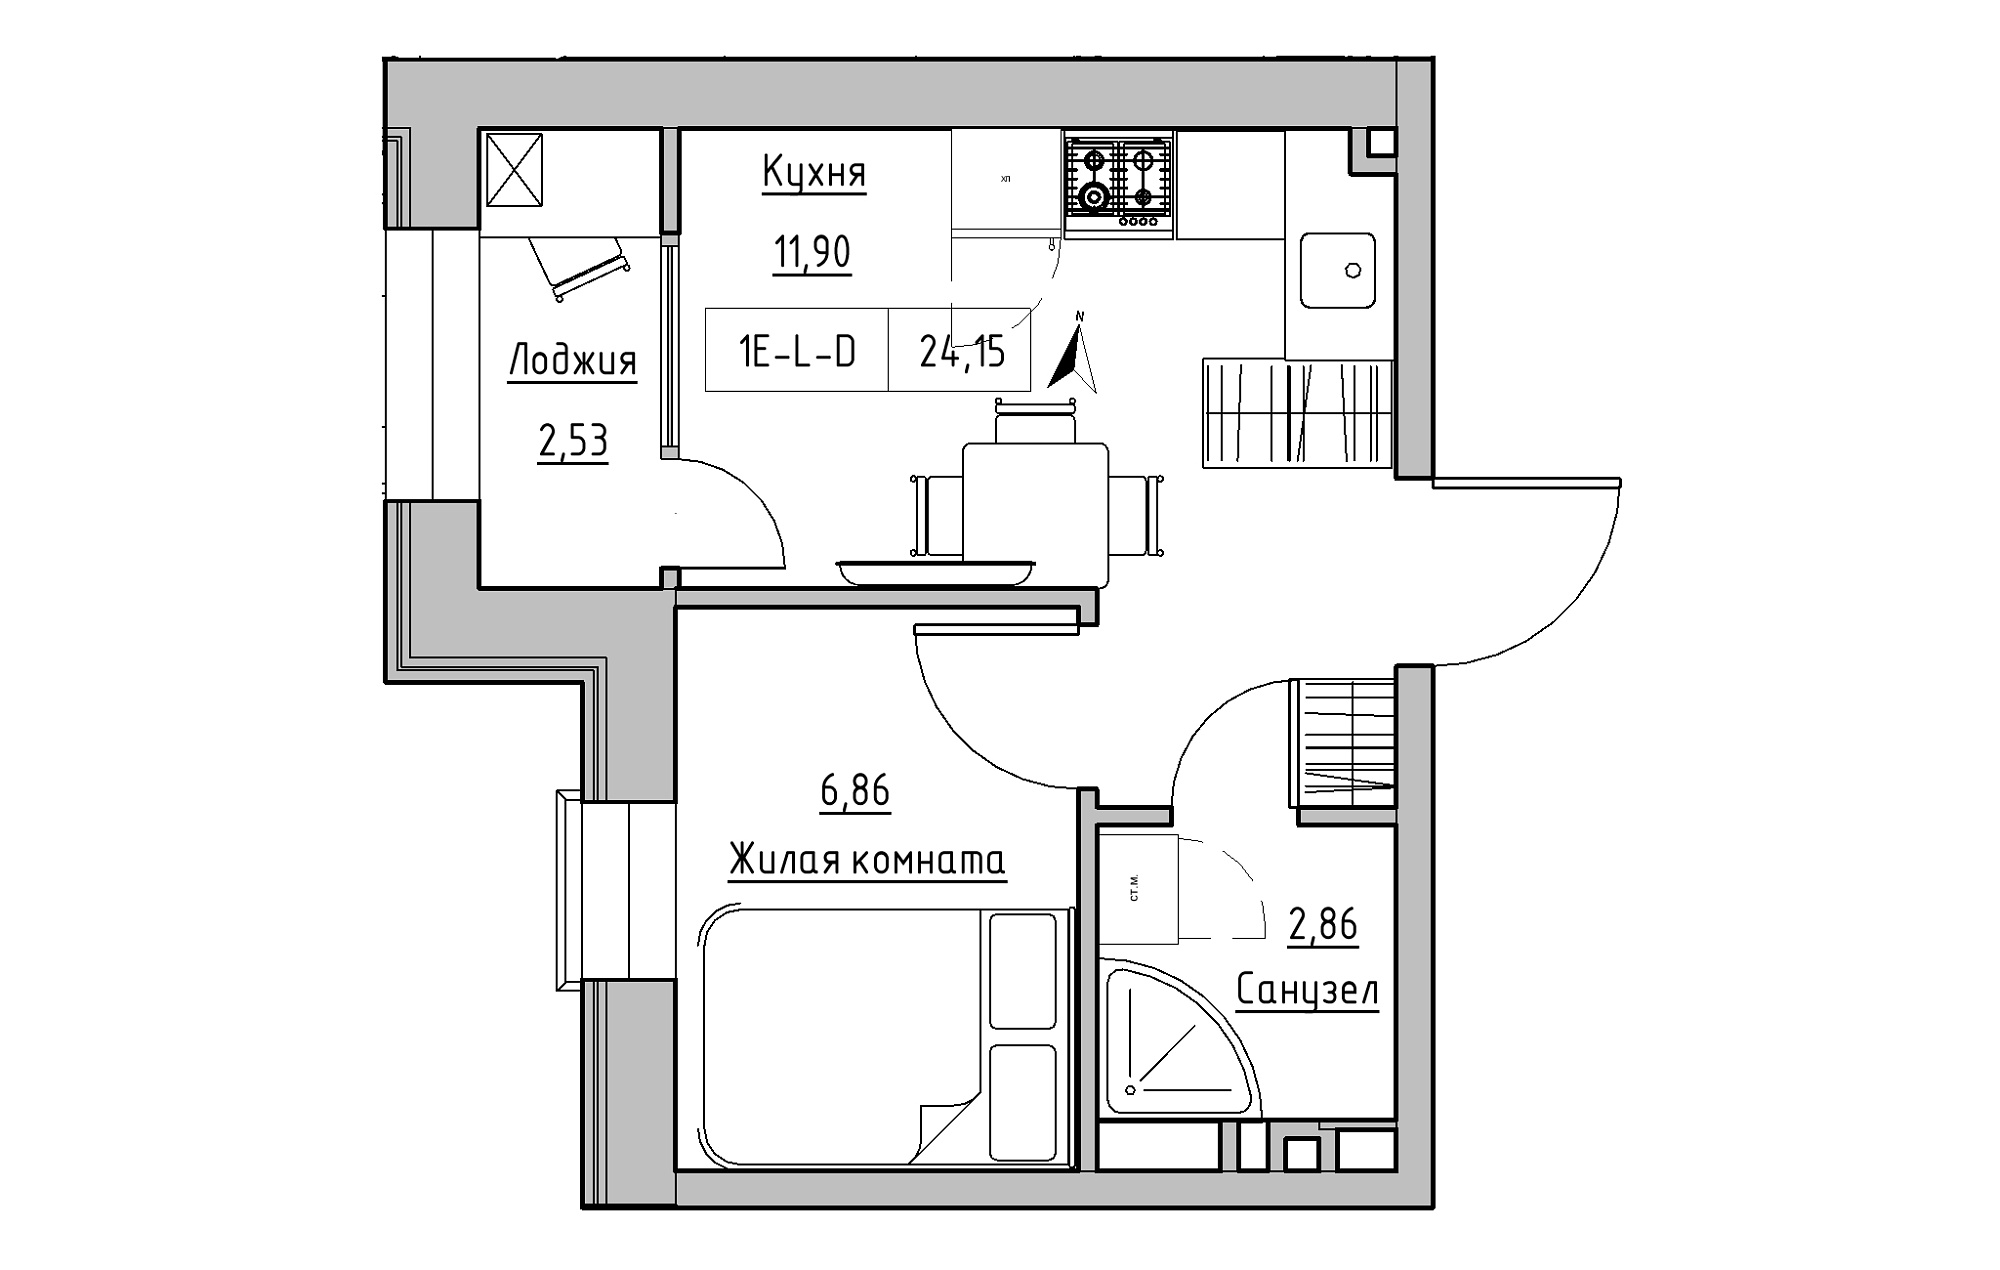 Planning 1-rm flats area 24.15m2, KS-019-02/0001.